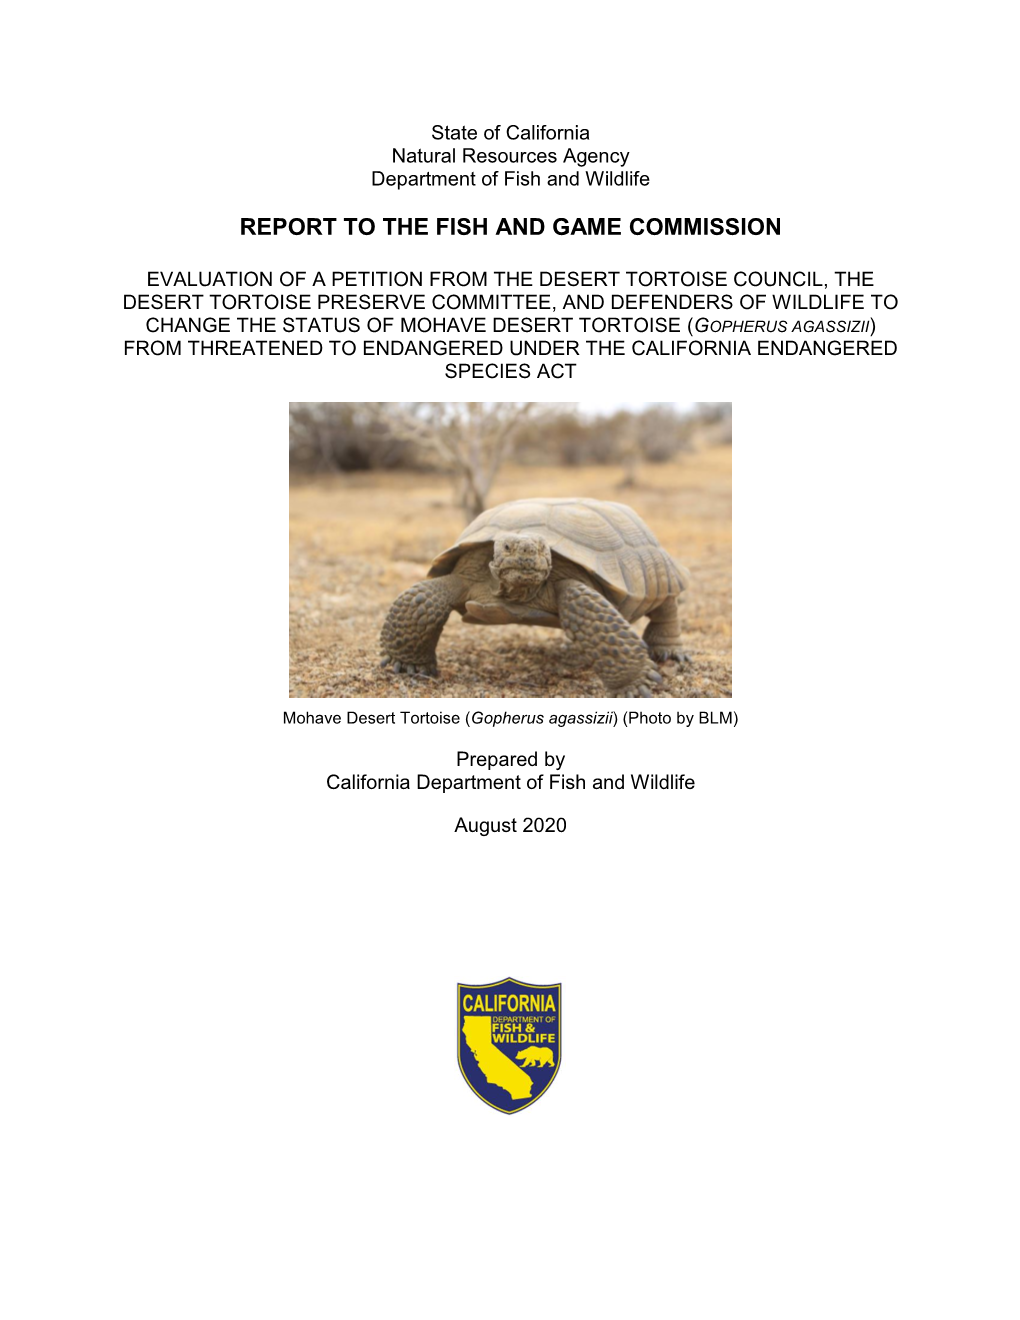 Mohave Desert Tortoise Petition Evaluation